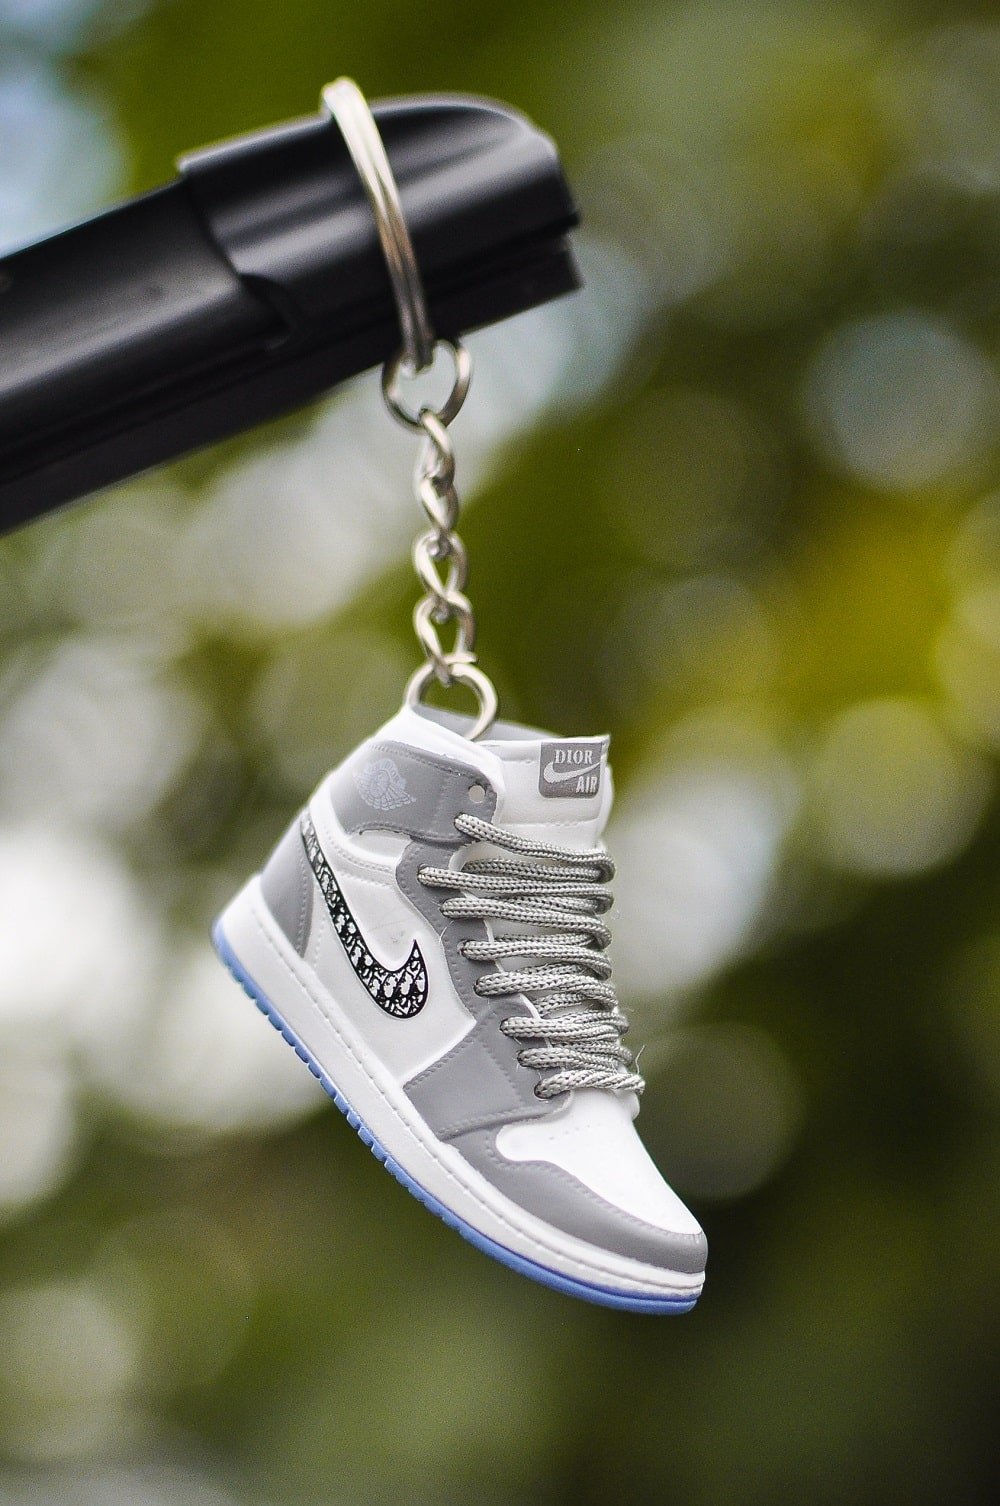 Kickz Store 3D Sneaker Keychain- Nike SB Dunk Low Heineken Pair